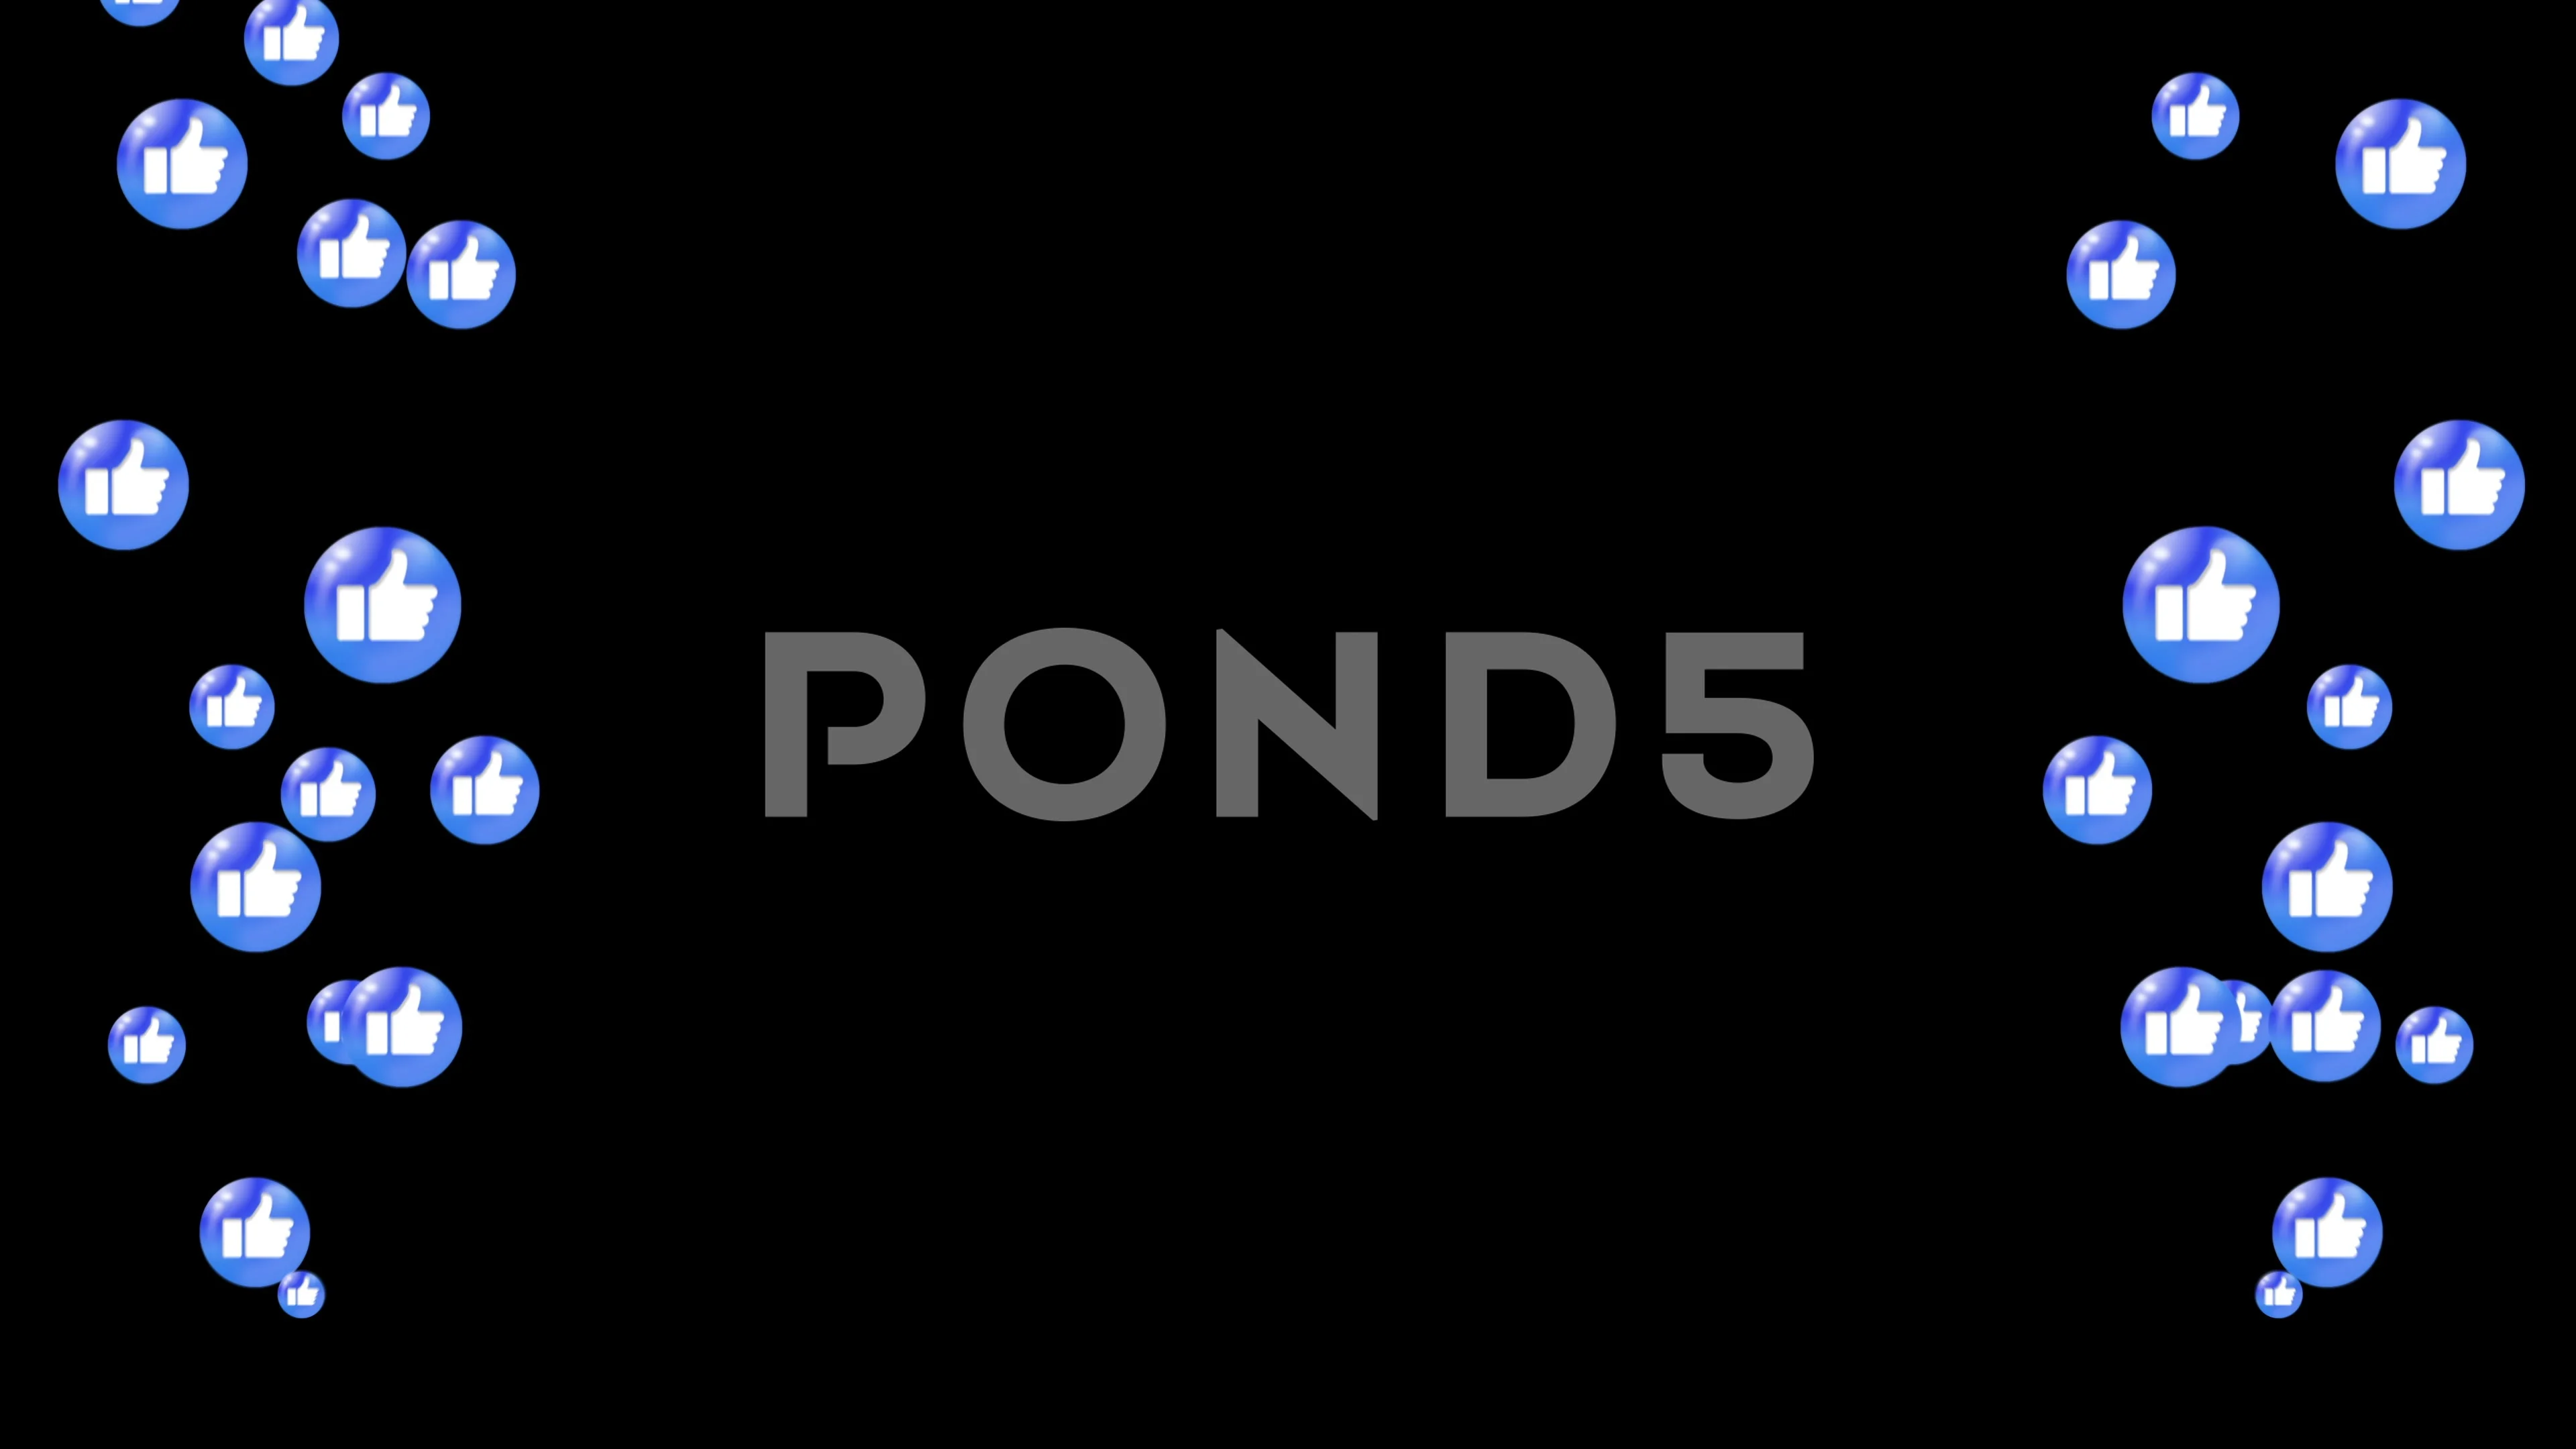 Pond5 live chat